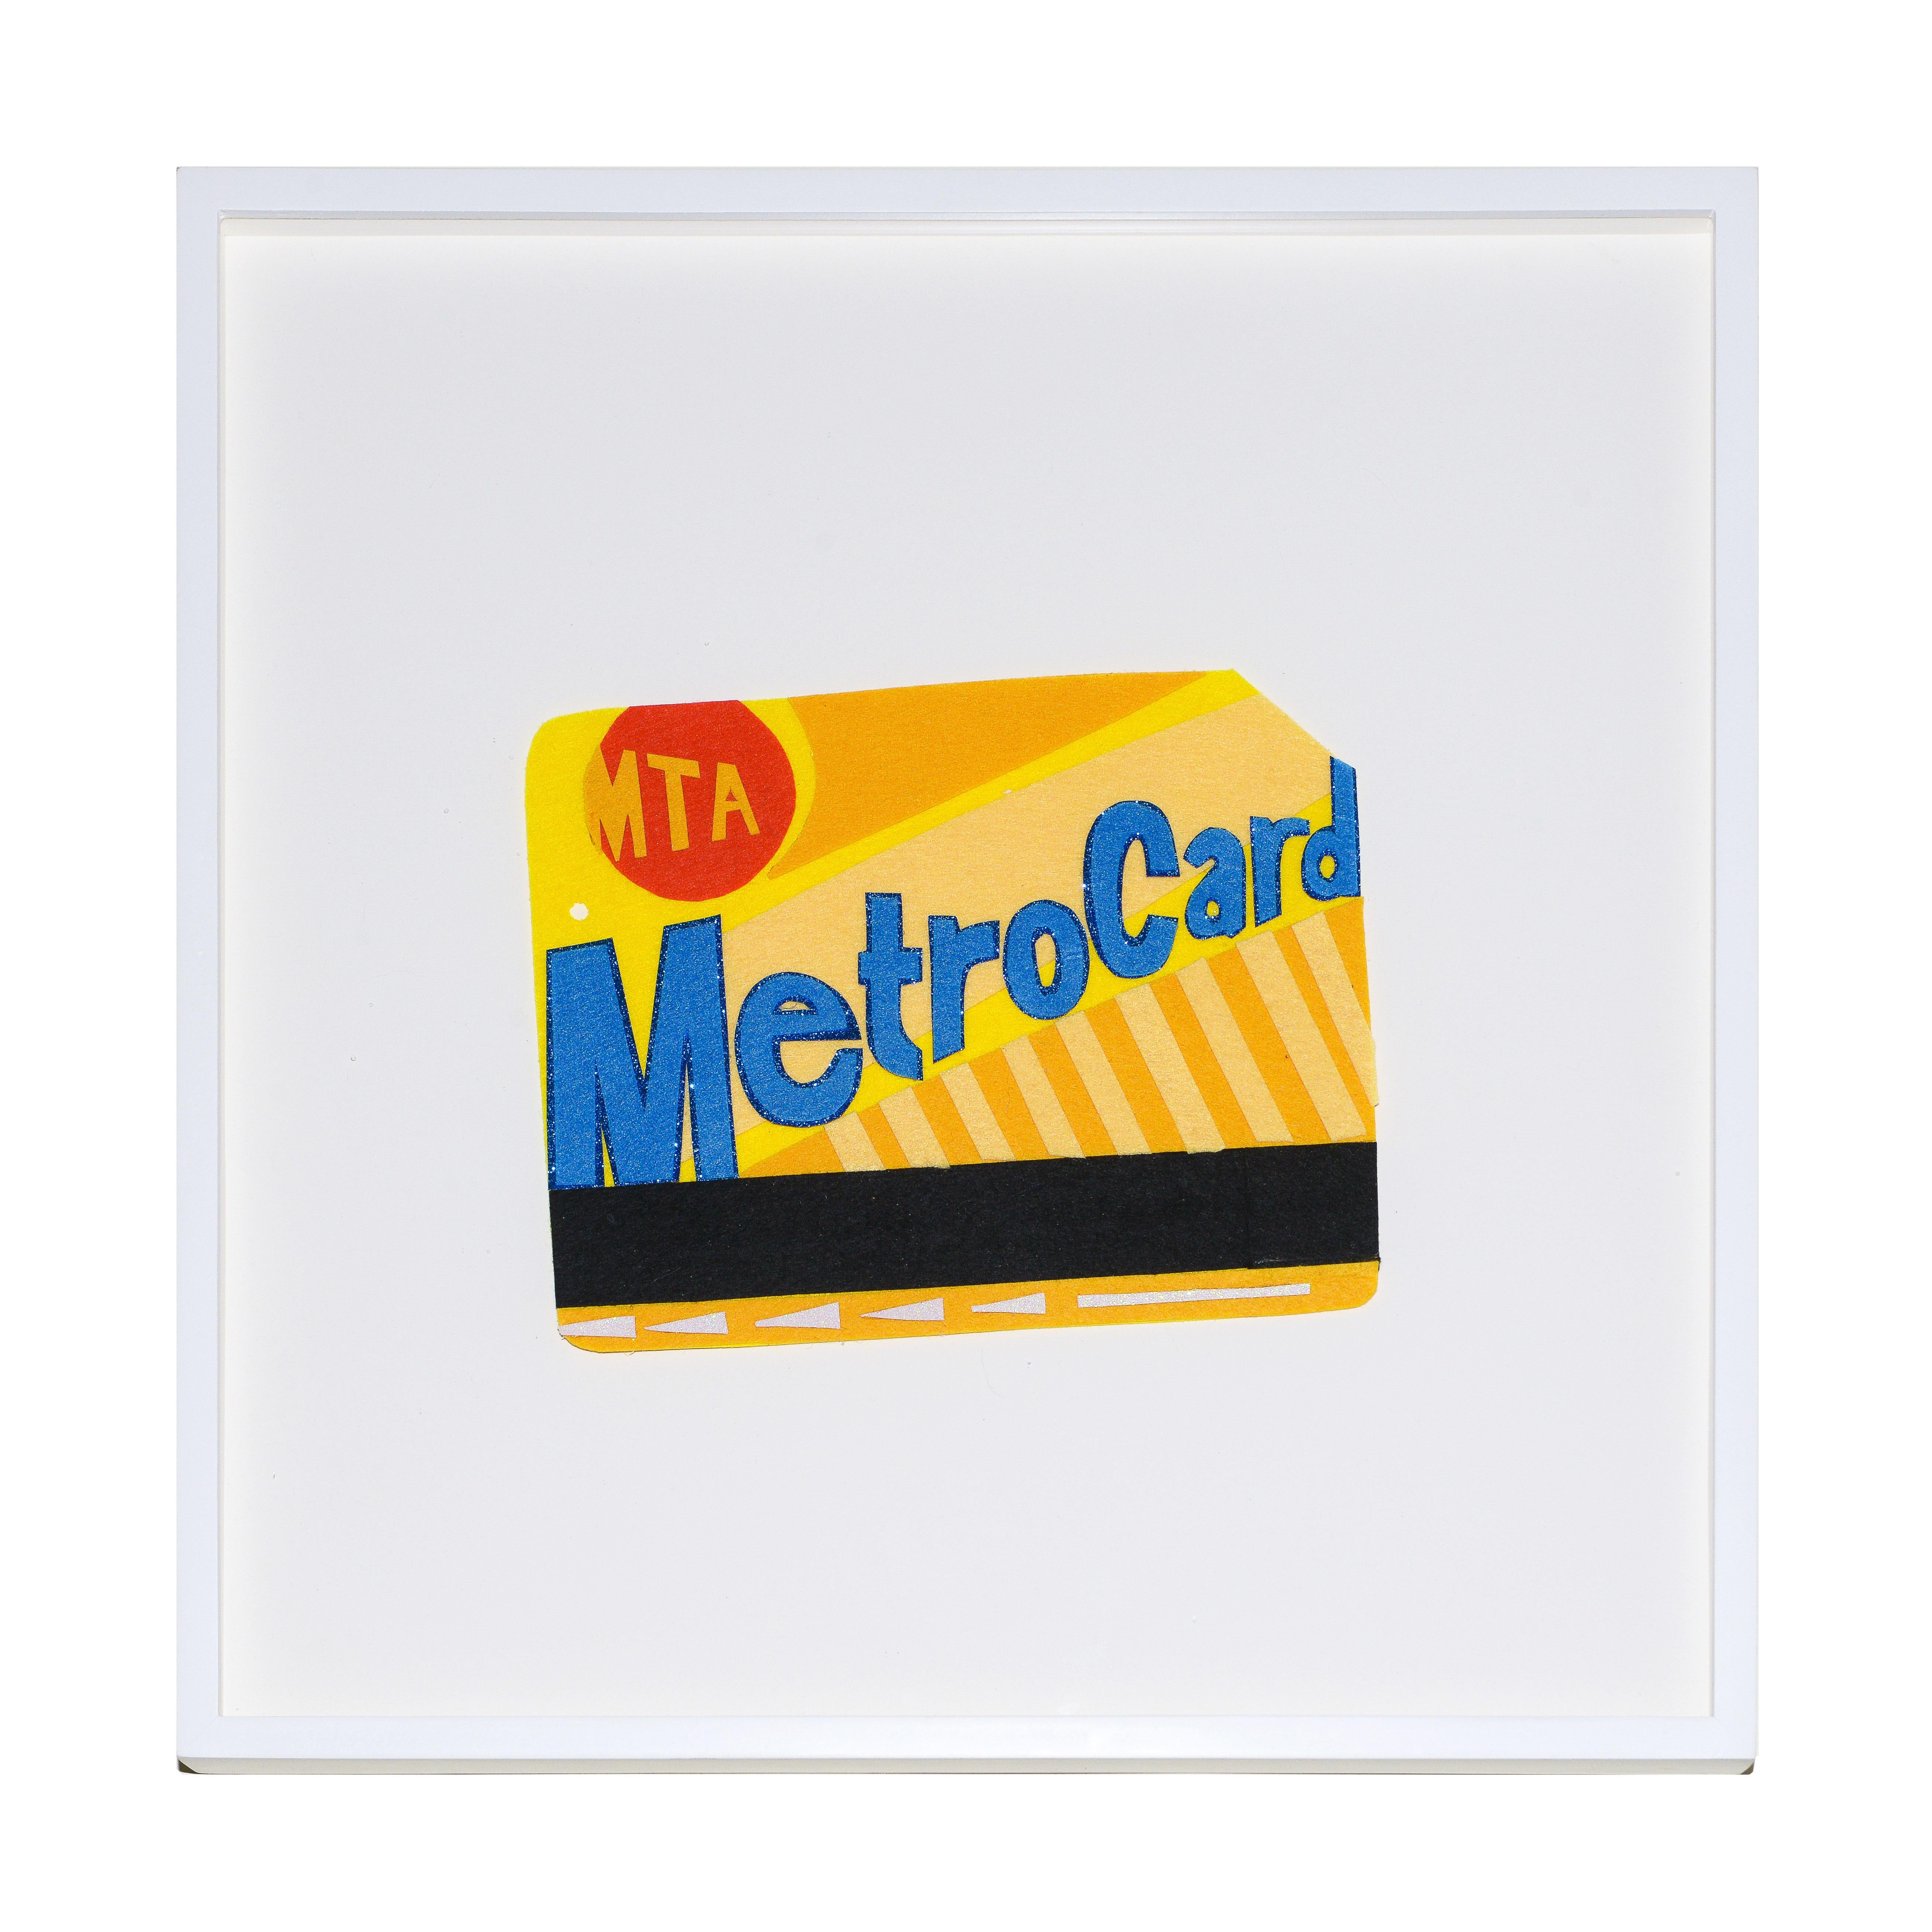 New York MTA Metrocard - Art by Sam Sidney